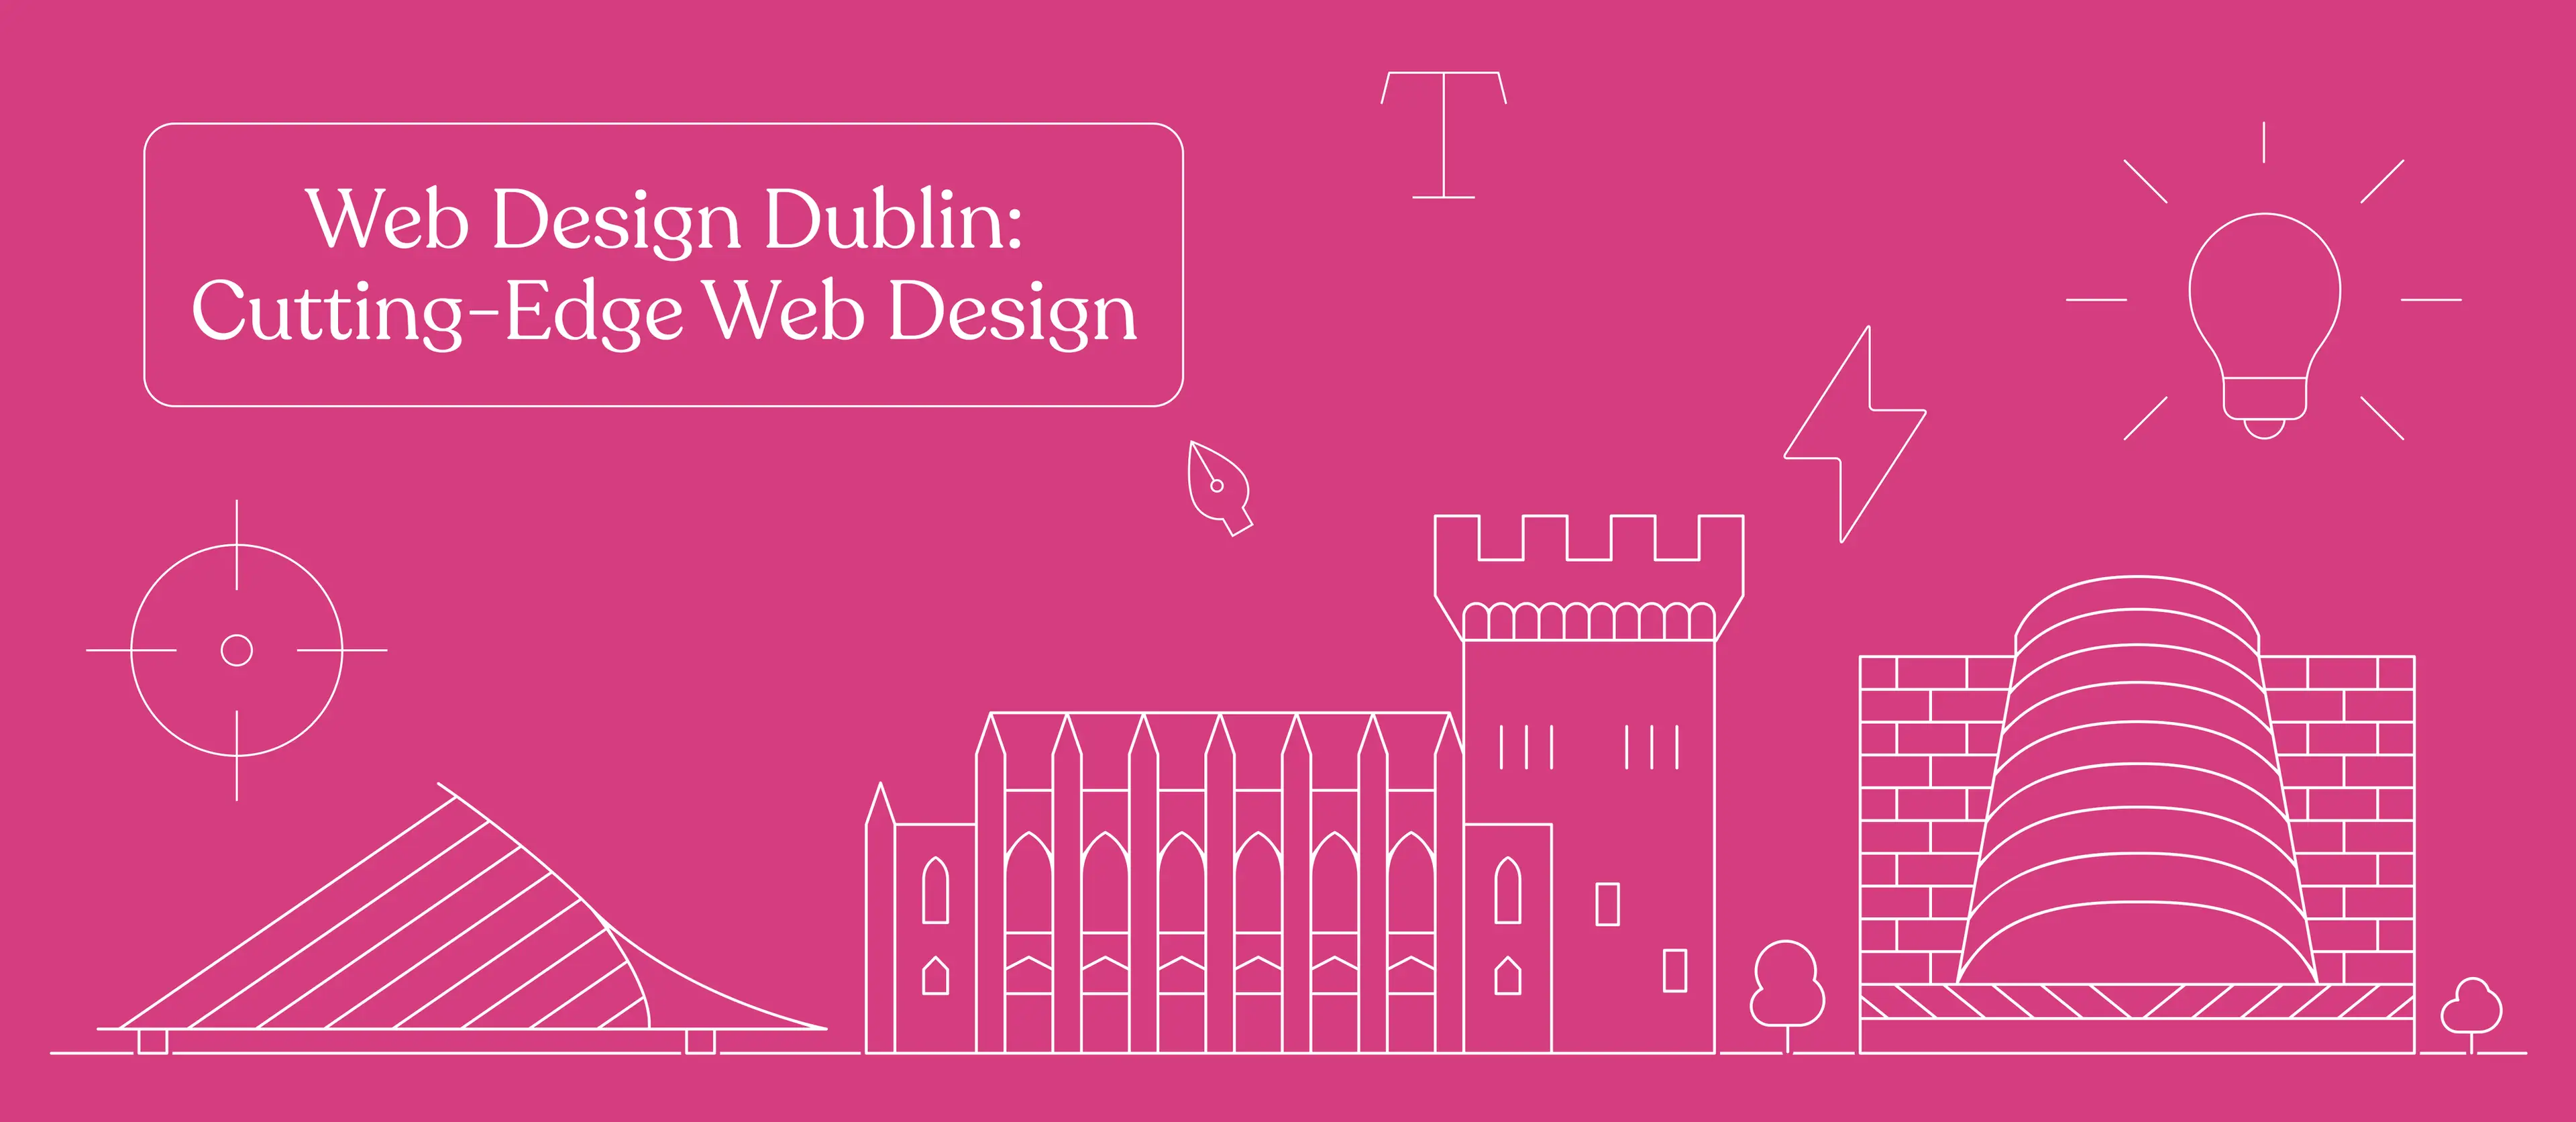 Web Design Dublin: Cutting-Edge Web Design